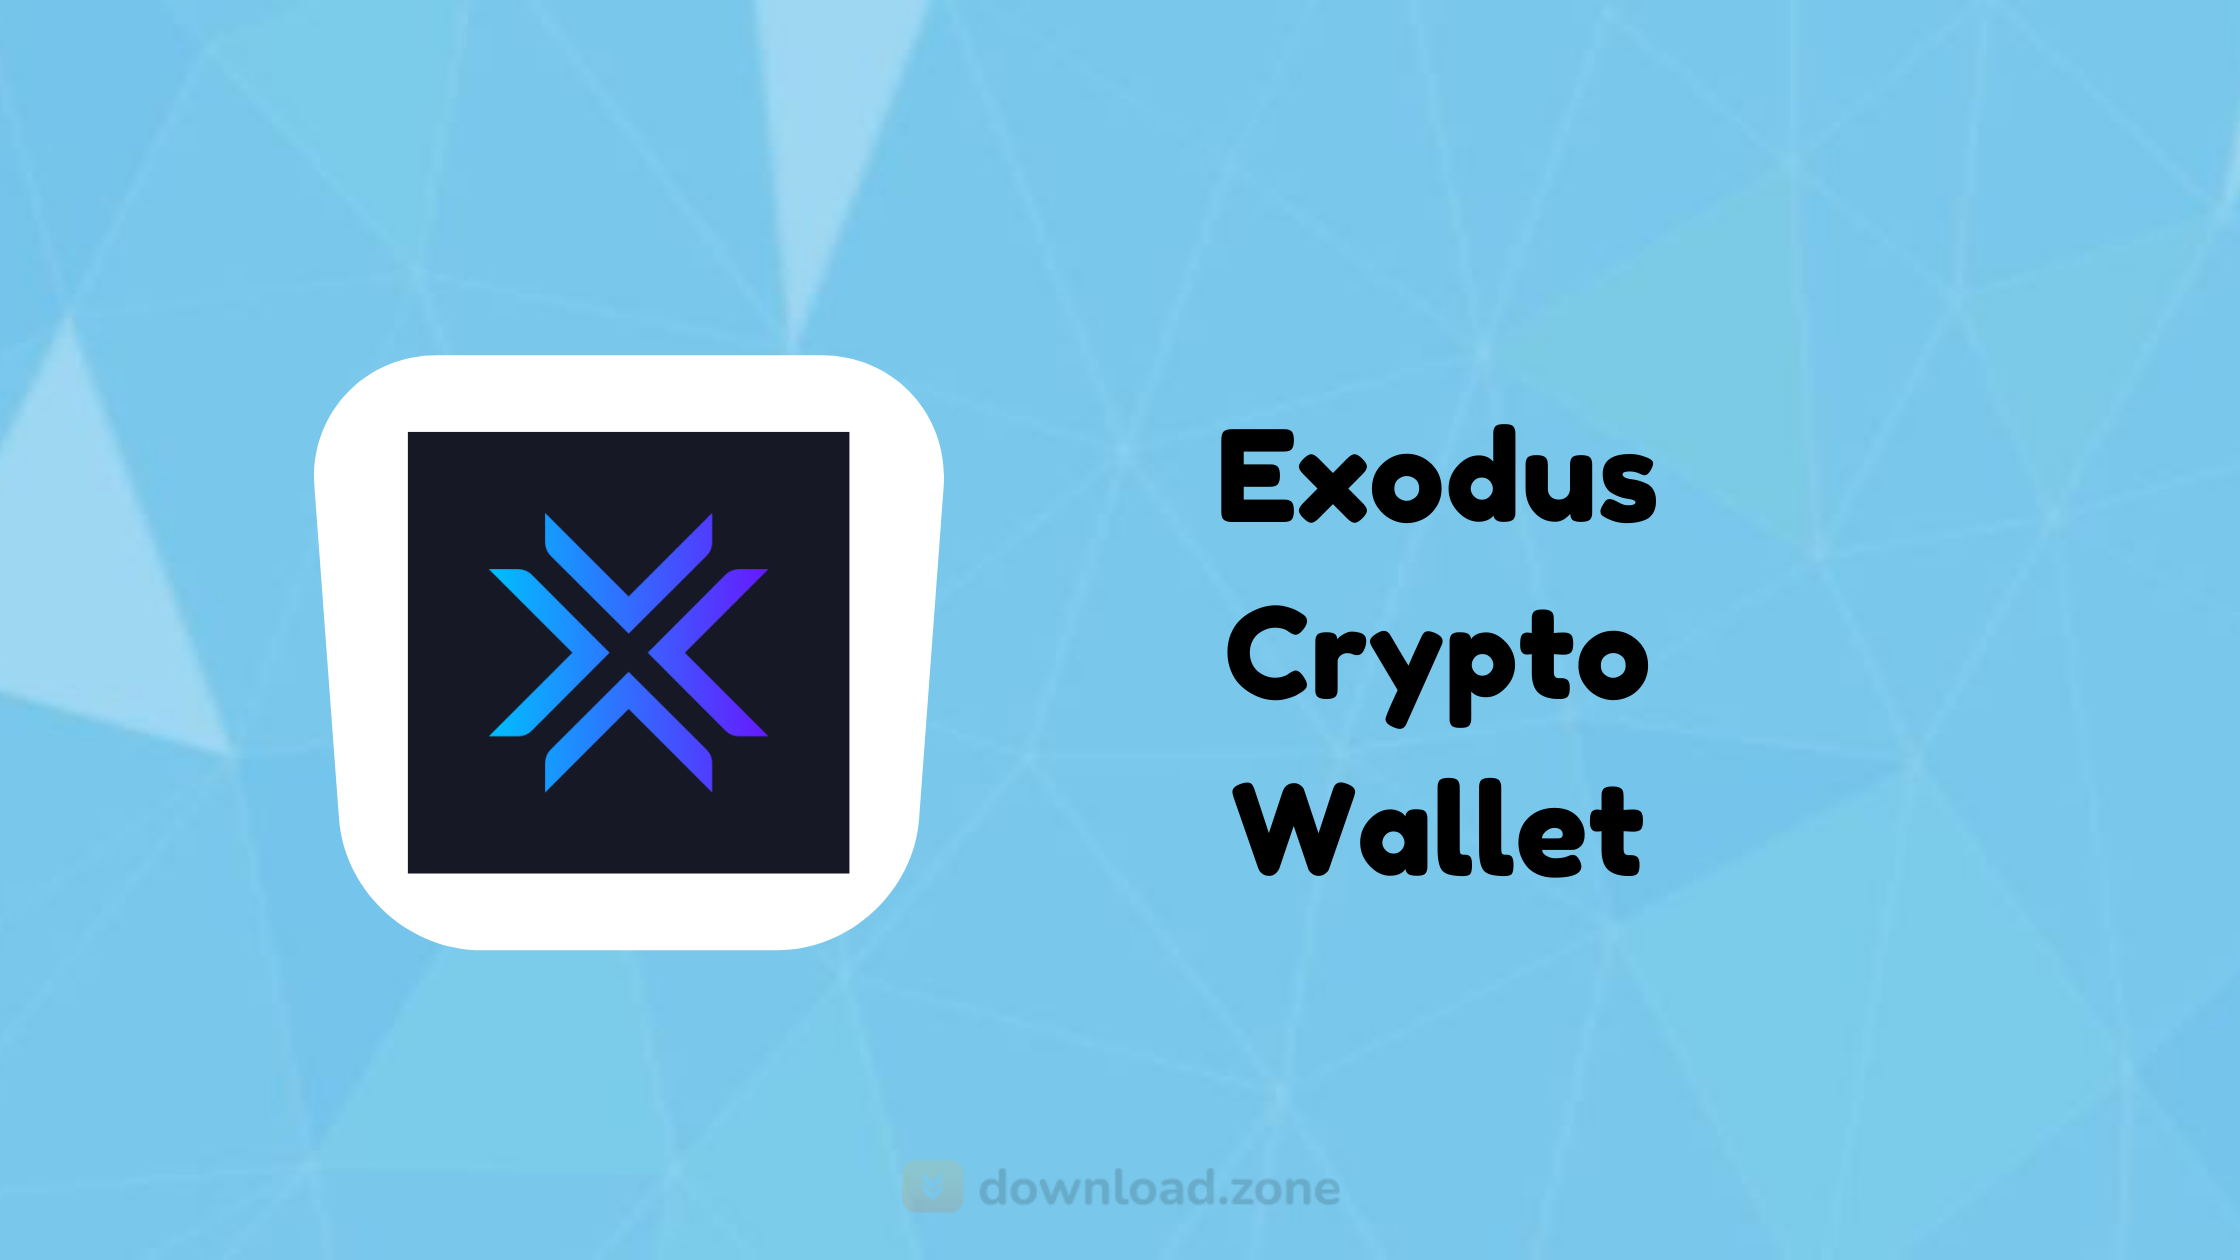 exodus crypto wallet anongmous